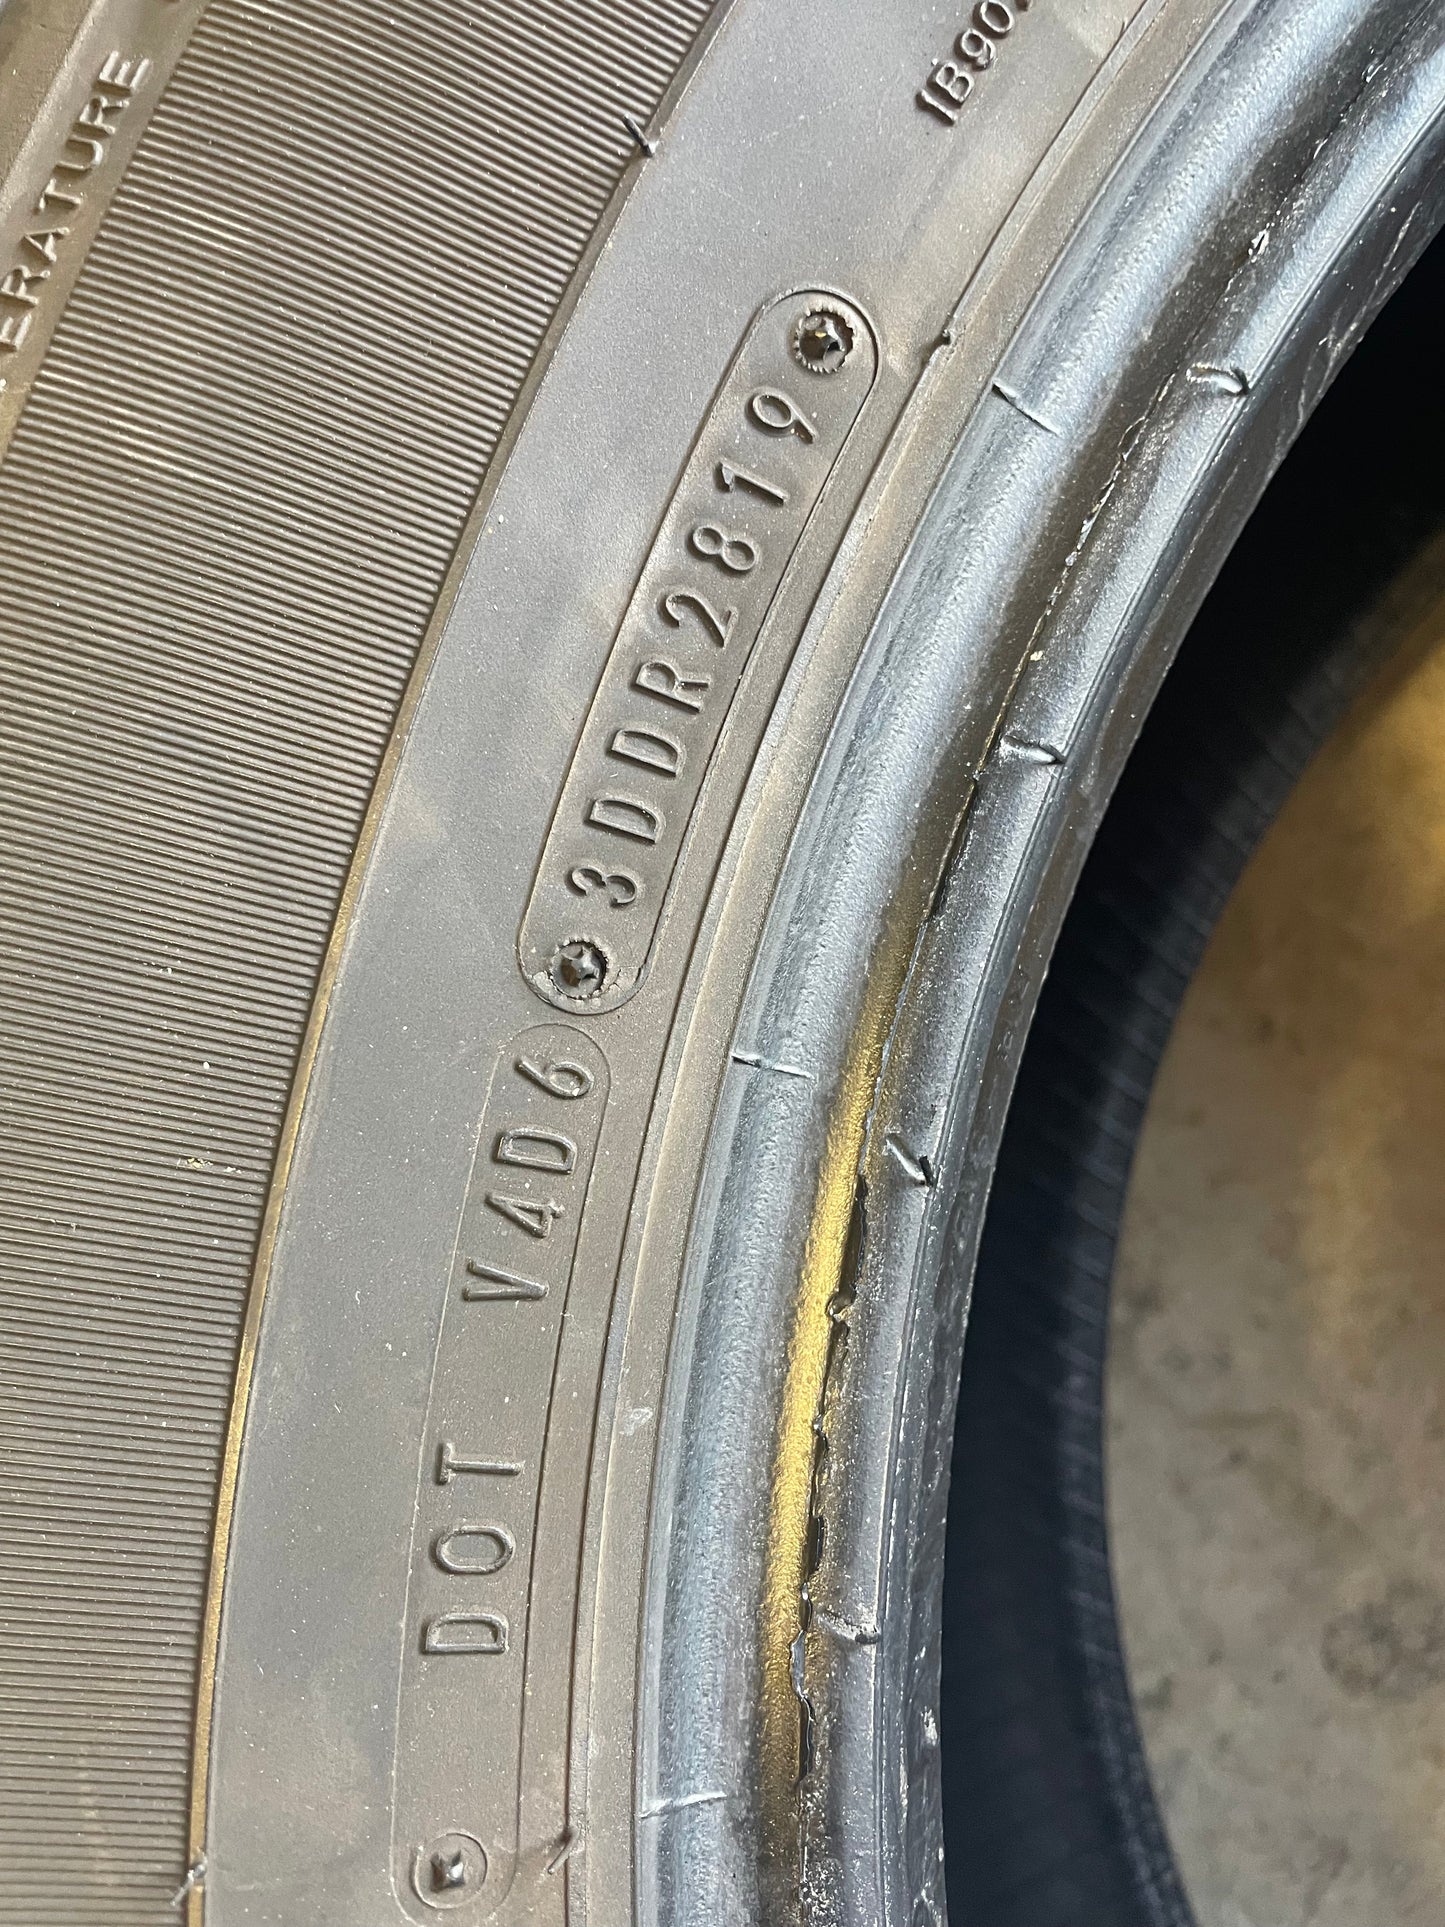 SINGLE 265/70R18 Dunlop Grandtrek AT23 116 H SL - Used Tires